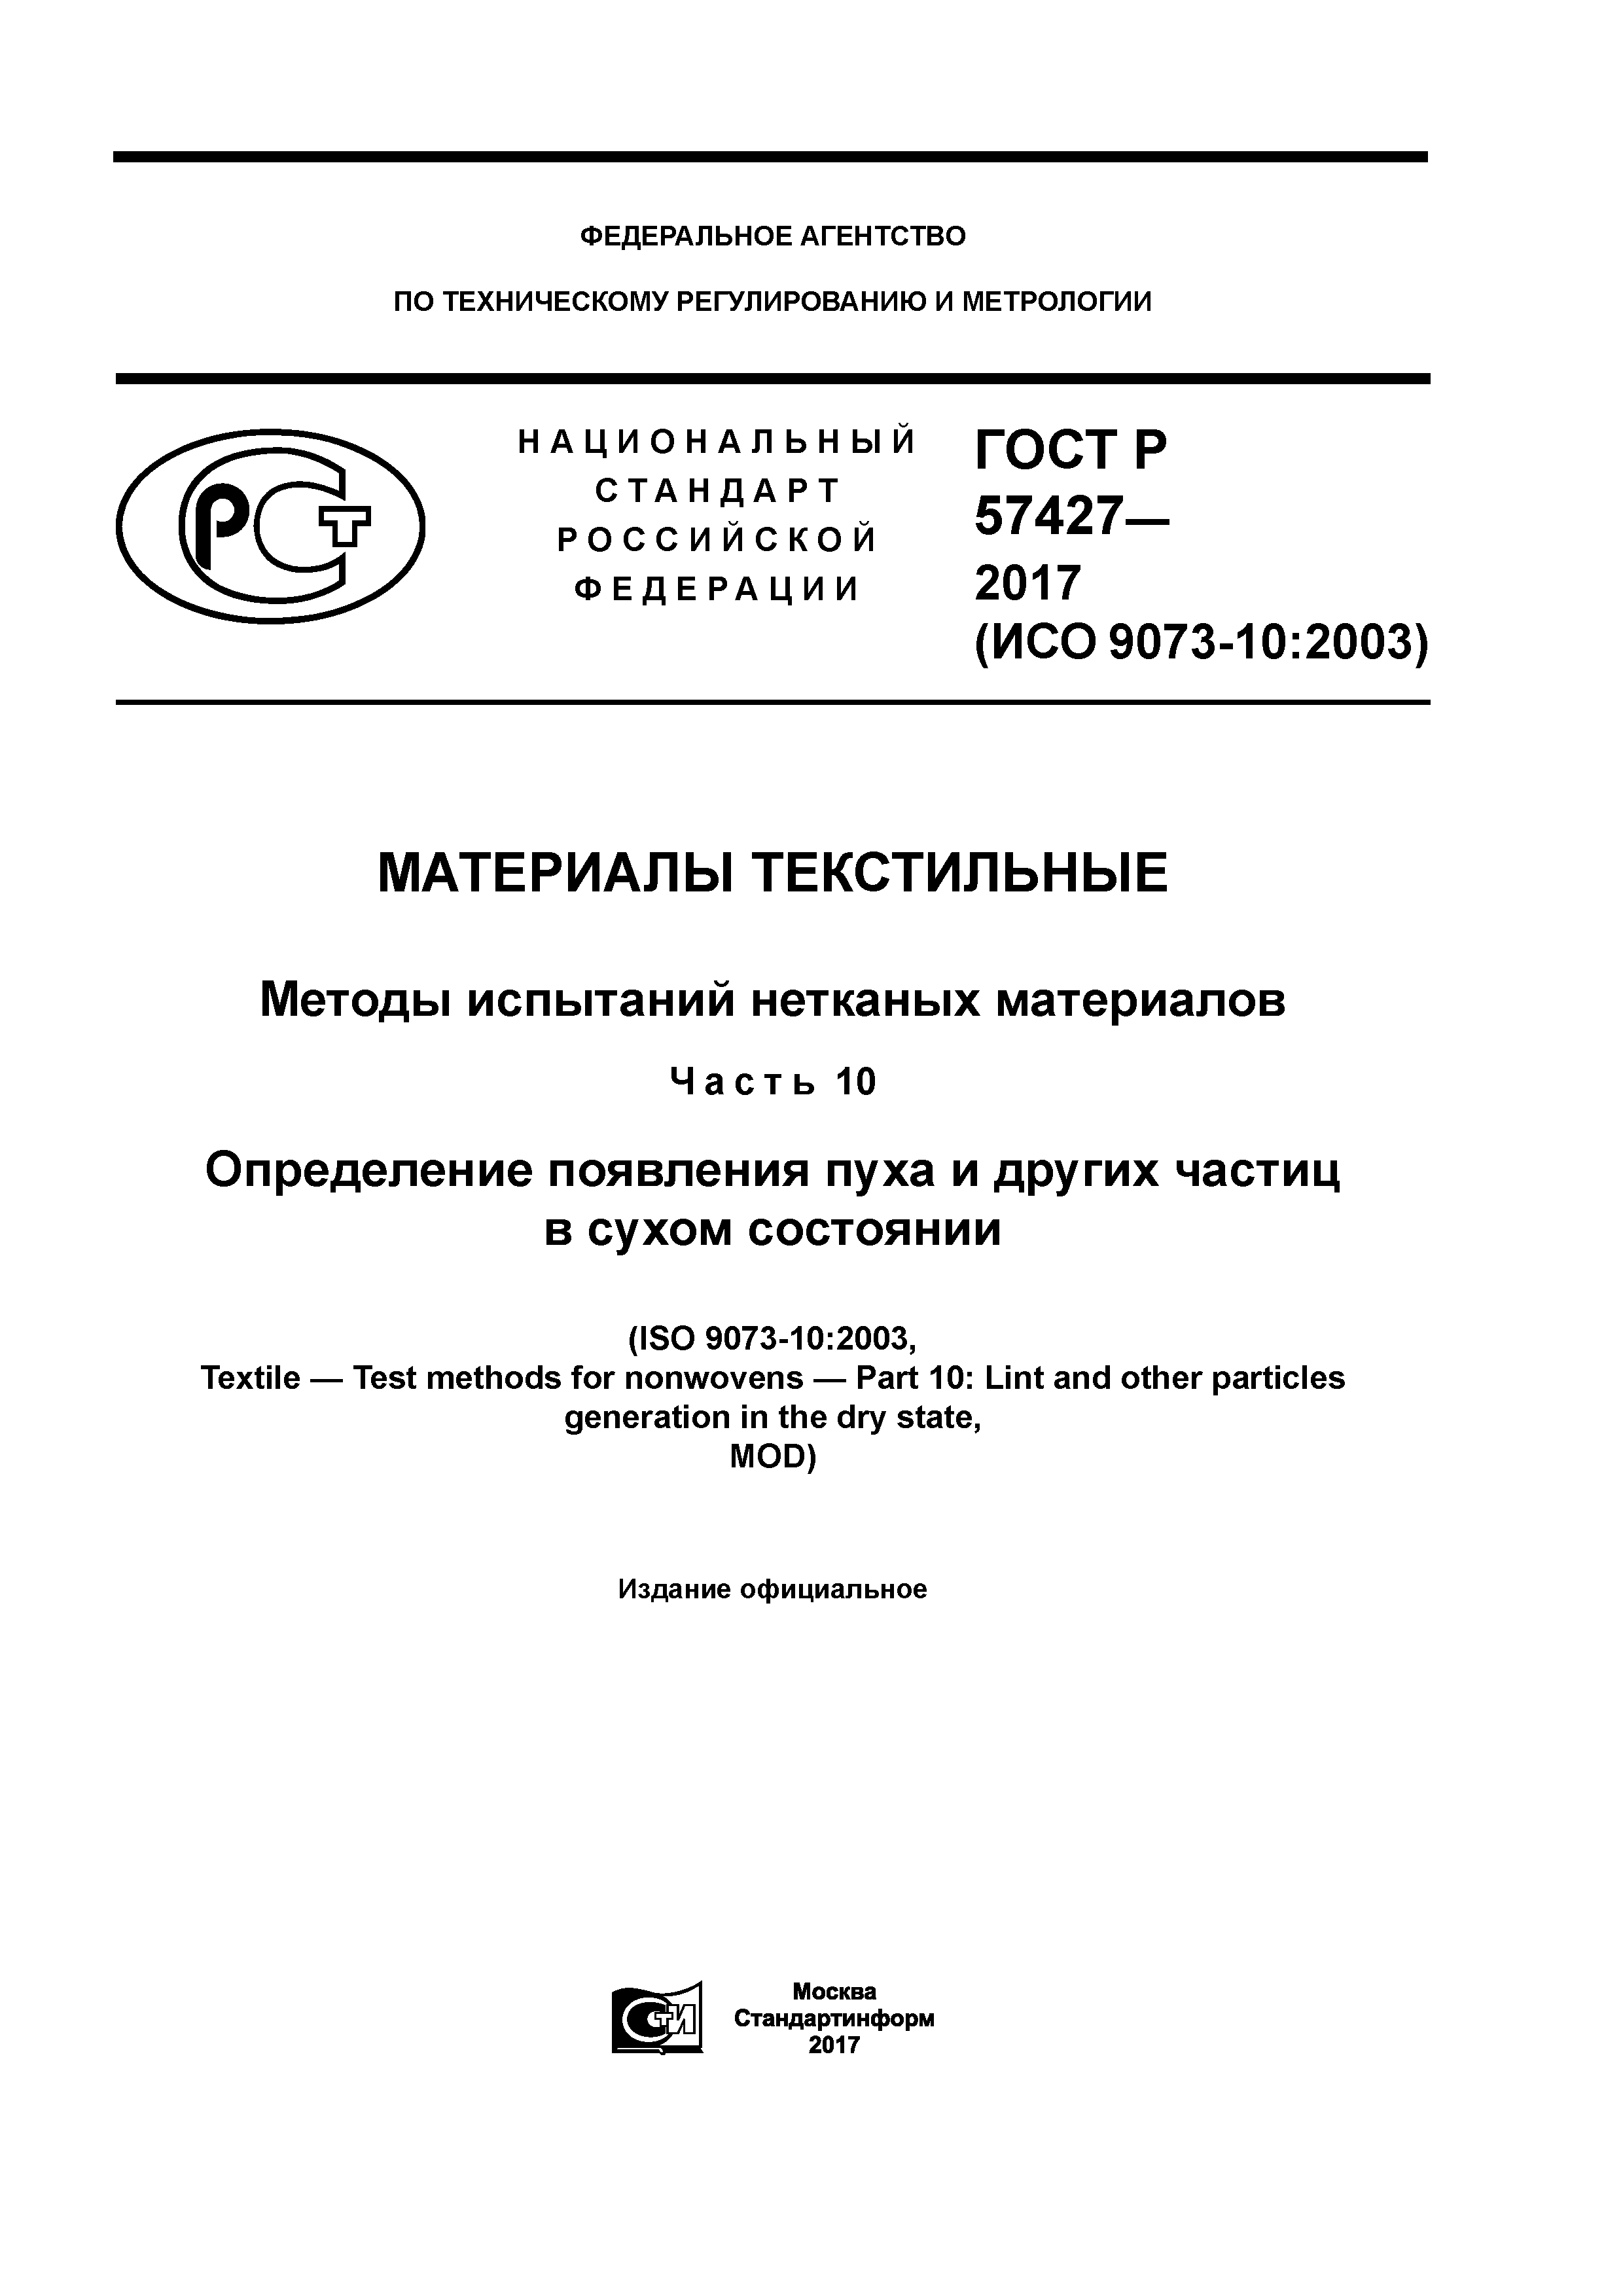 ГОСТ Р 57427-2017